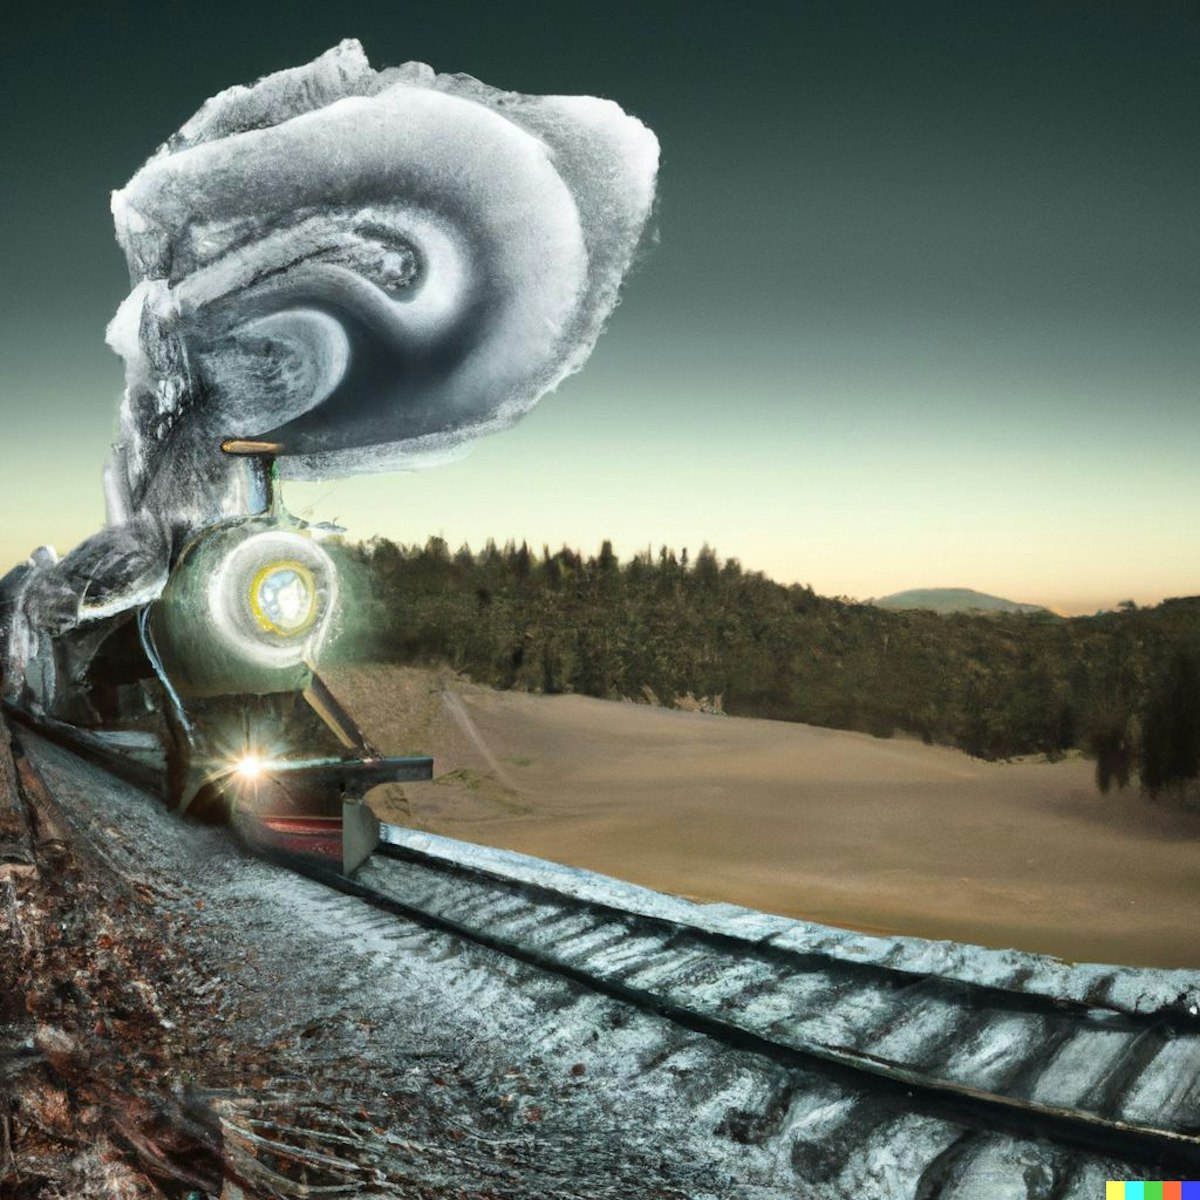 featured image - O que as ferrovias transcontinentais nos ensinam sobre tecnologia